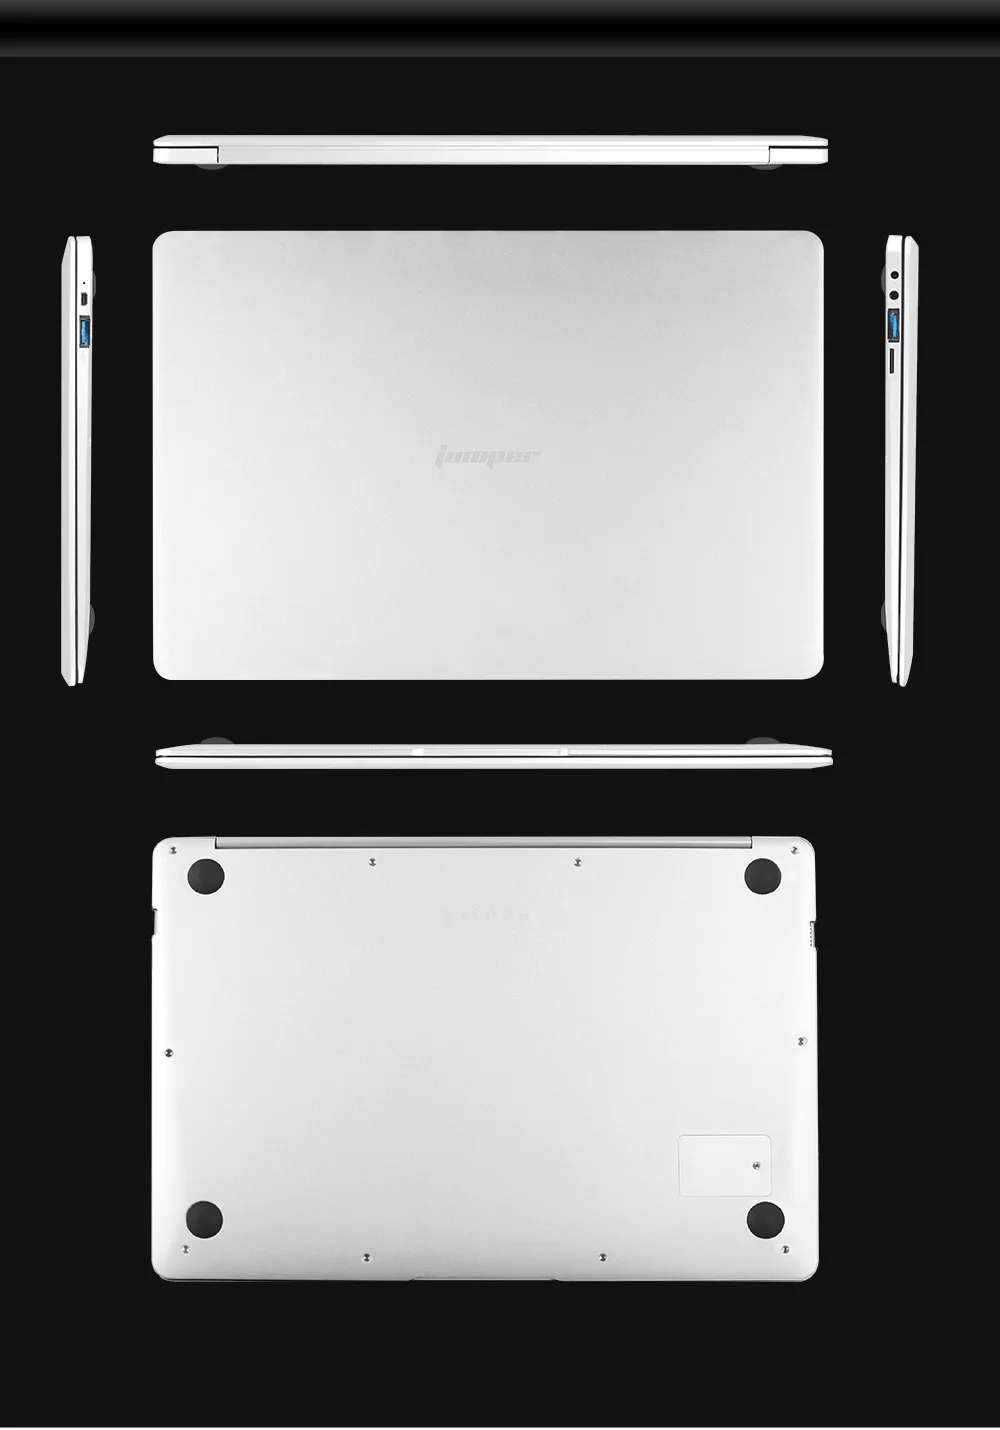 Jumper EZbook X4 ноутбук 14,0 "FHD Windows 10 ноутбук клавиатура с подсветкой Intel Apollo Lake J3455 четырехъядерный процессор 6 ГБ + 128 Гб SSD 2MP ПК